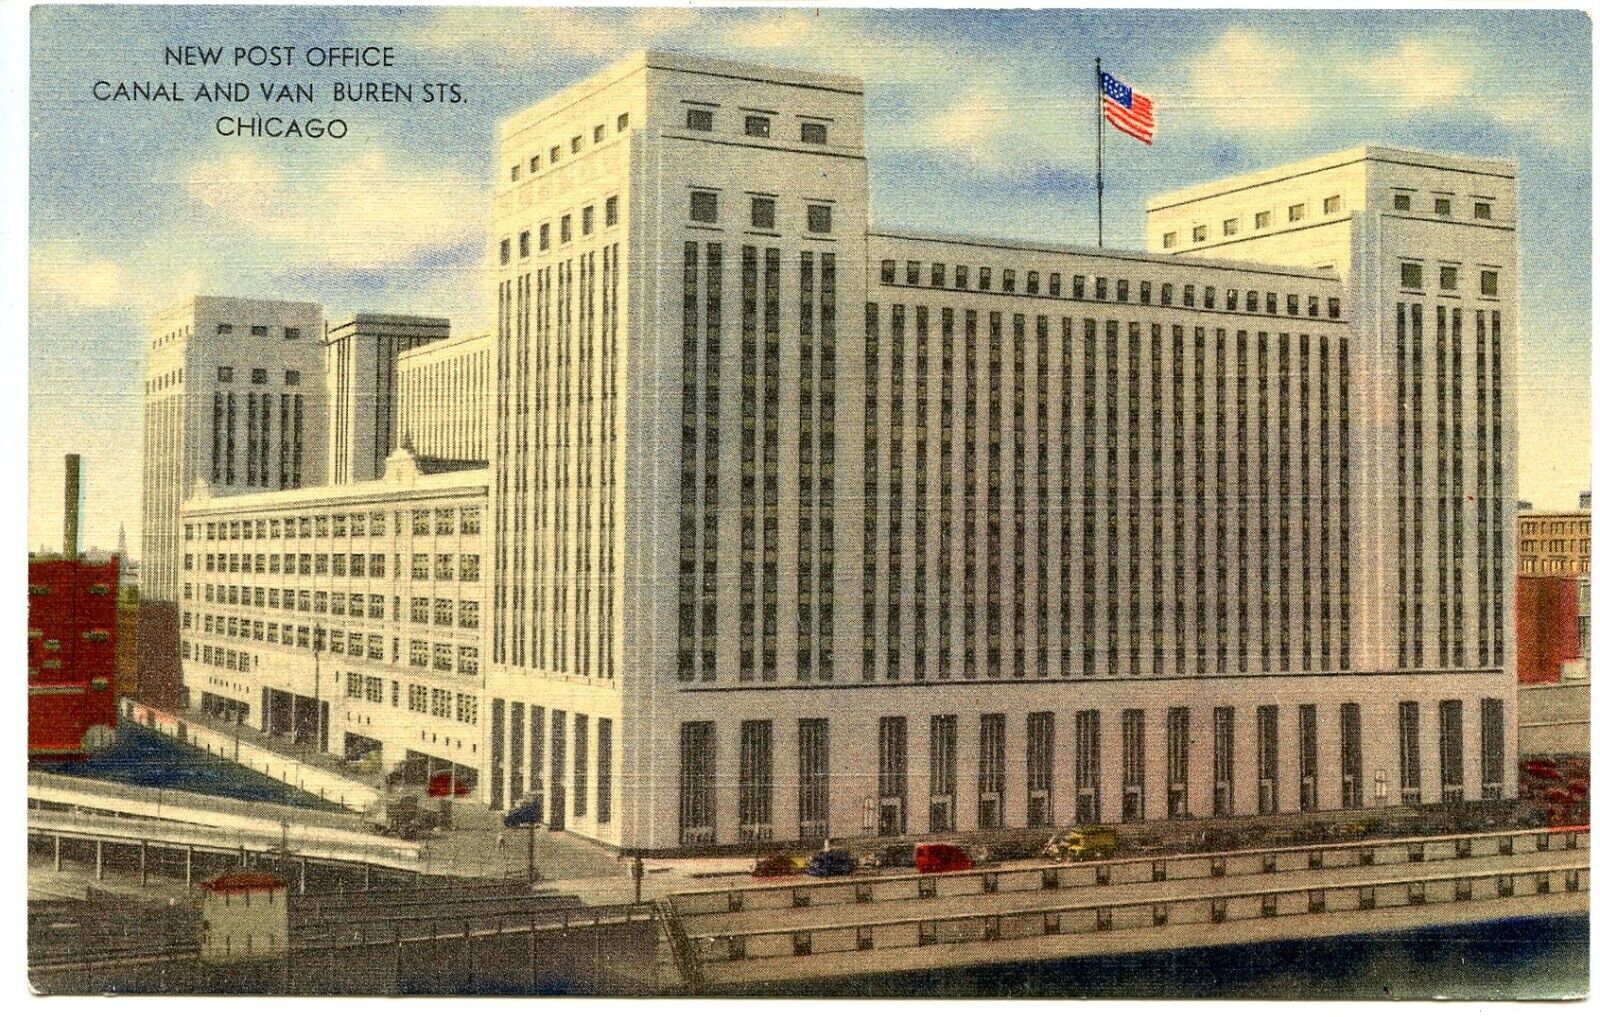 New Post Office Canal and Van Buren Sts. Chicago Vintage Linen Postcard Unposted